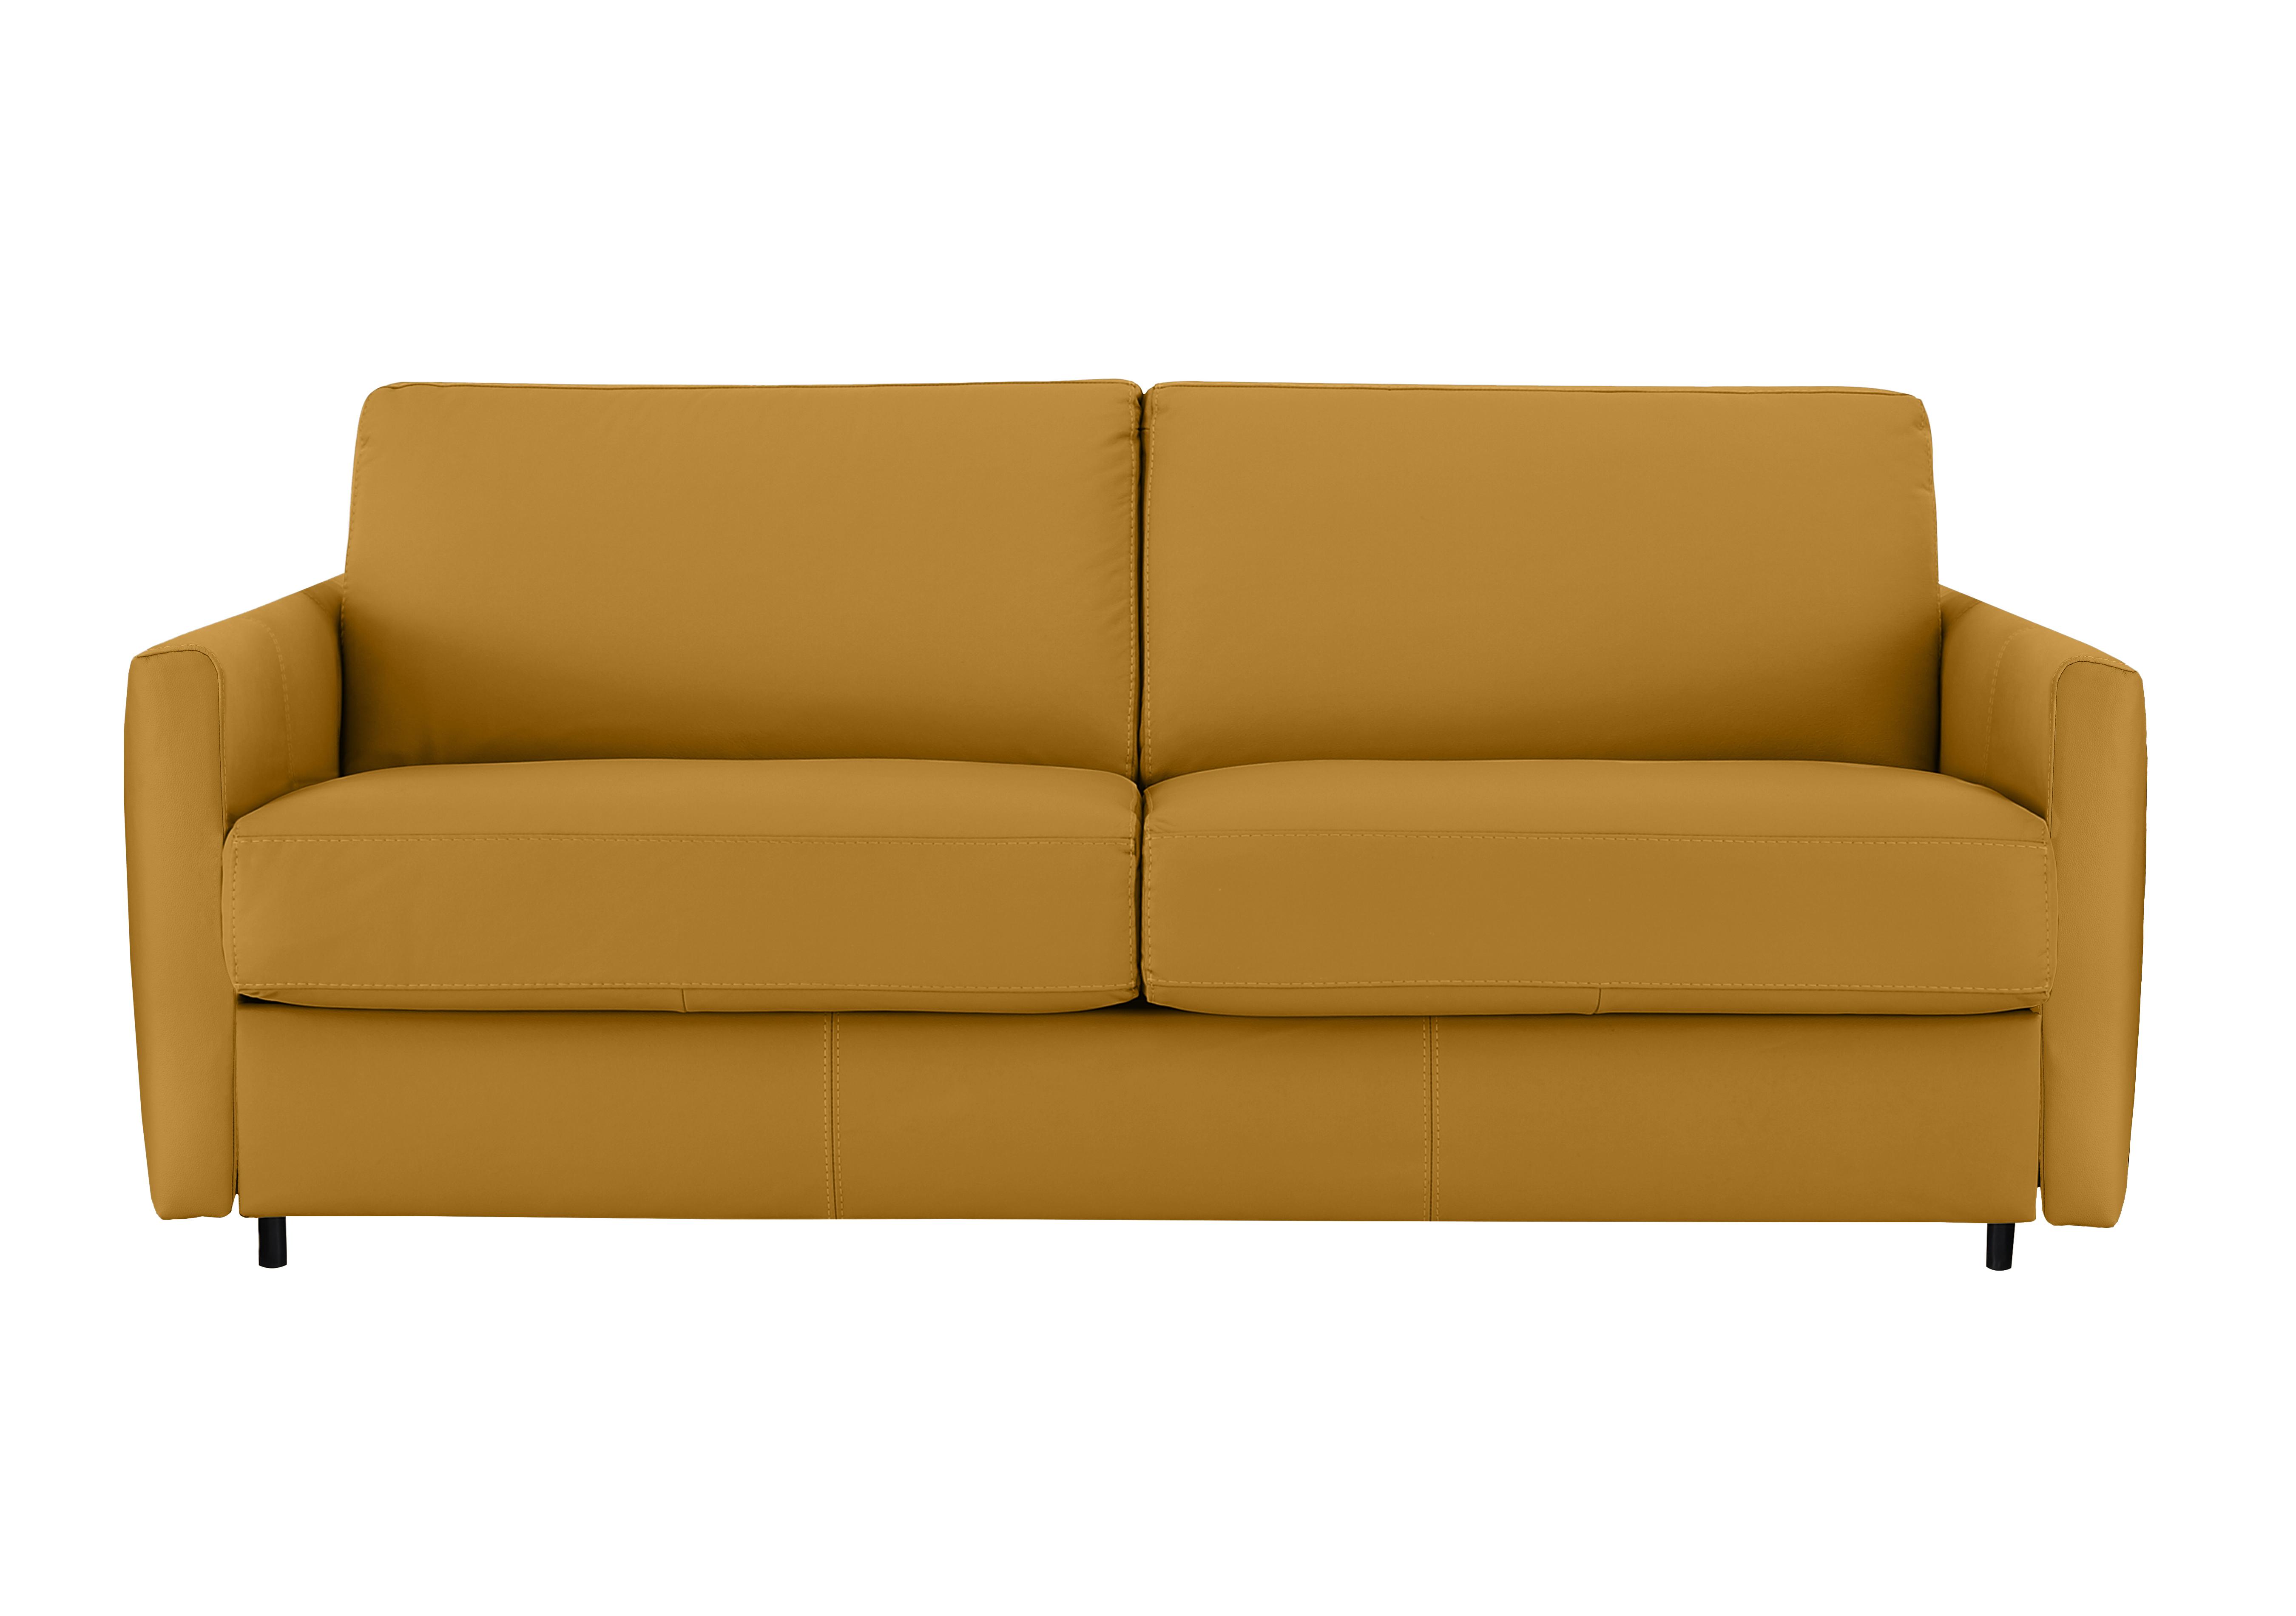 Alcova 3 Seater Leather Sofa Bed with Slim Arms in Torello Senape 355 on Furniture Village